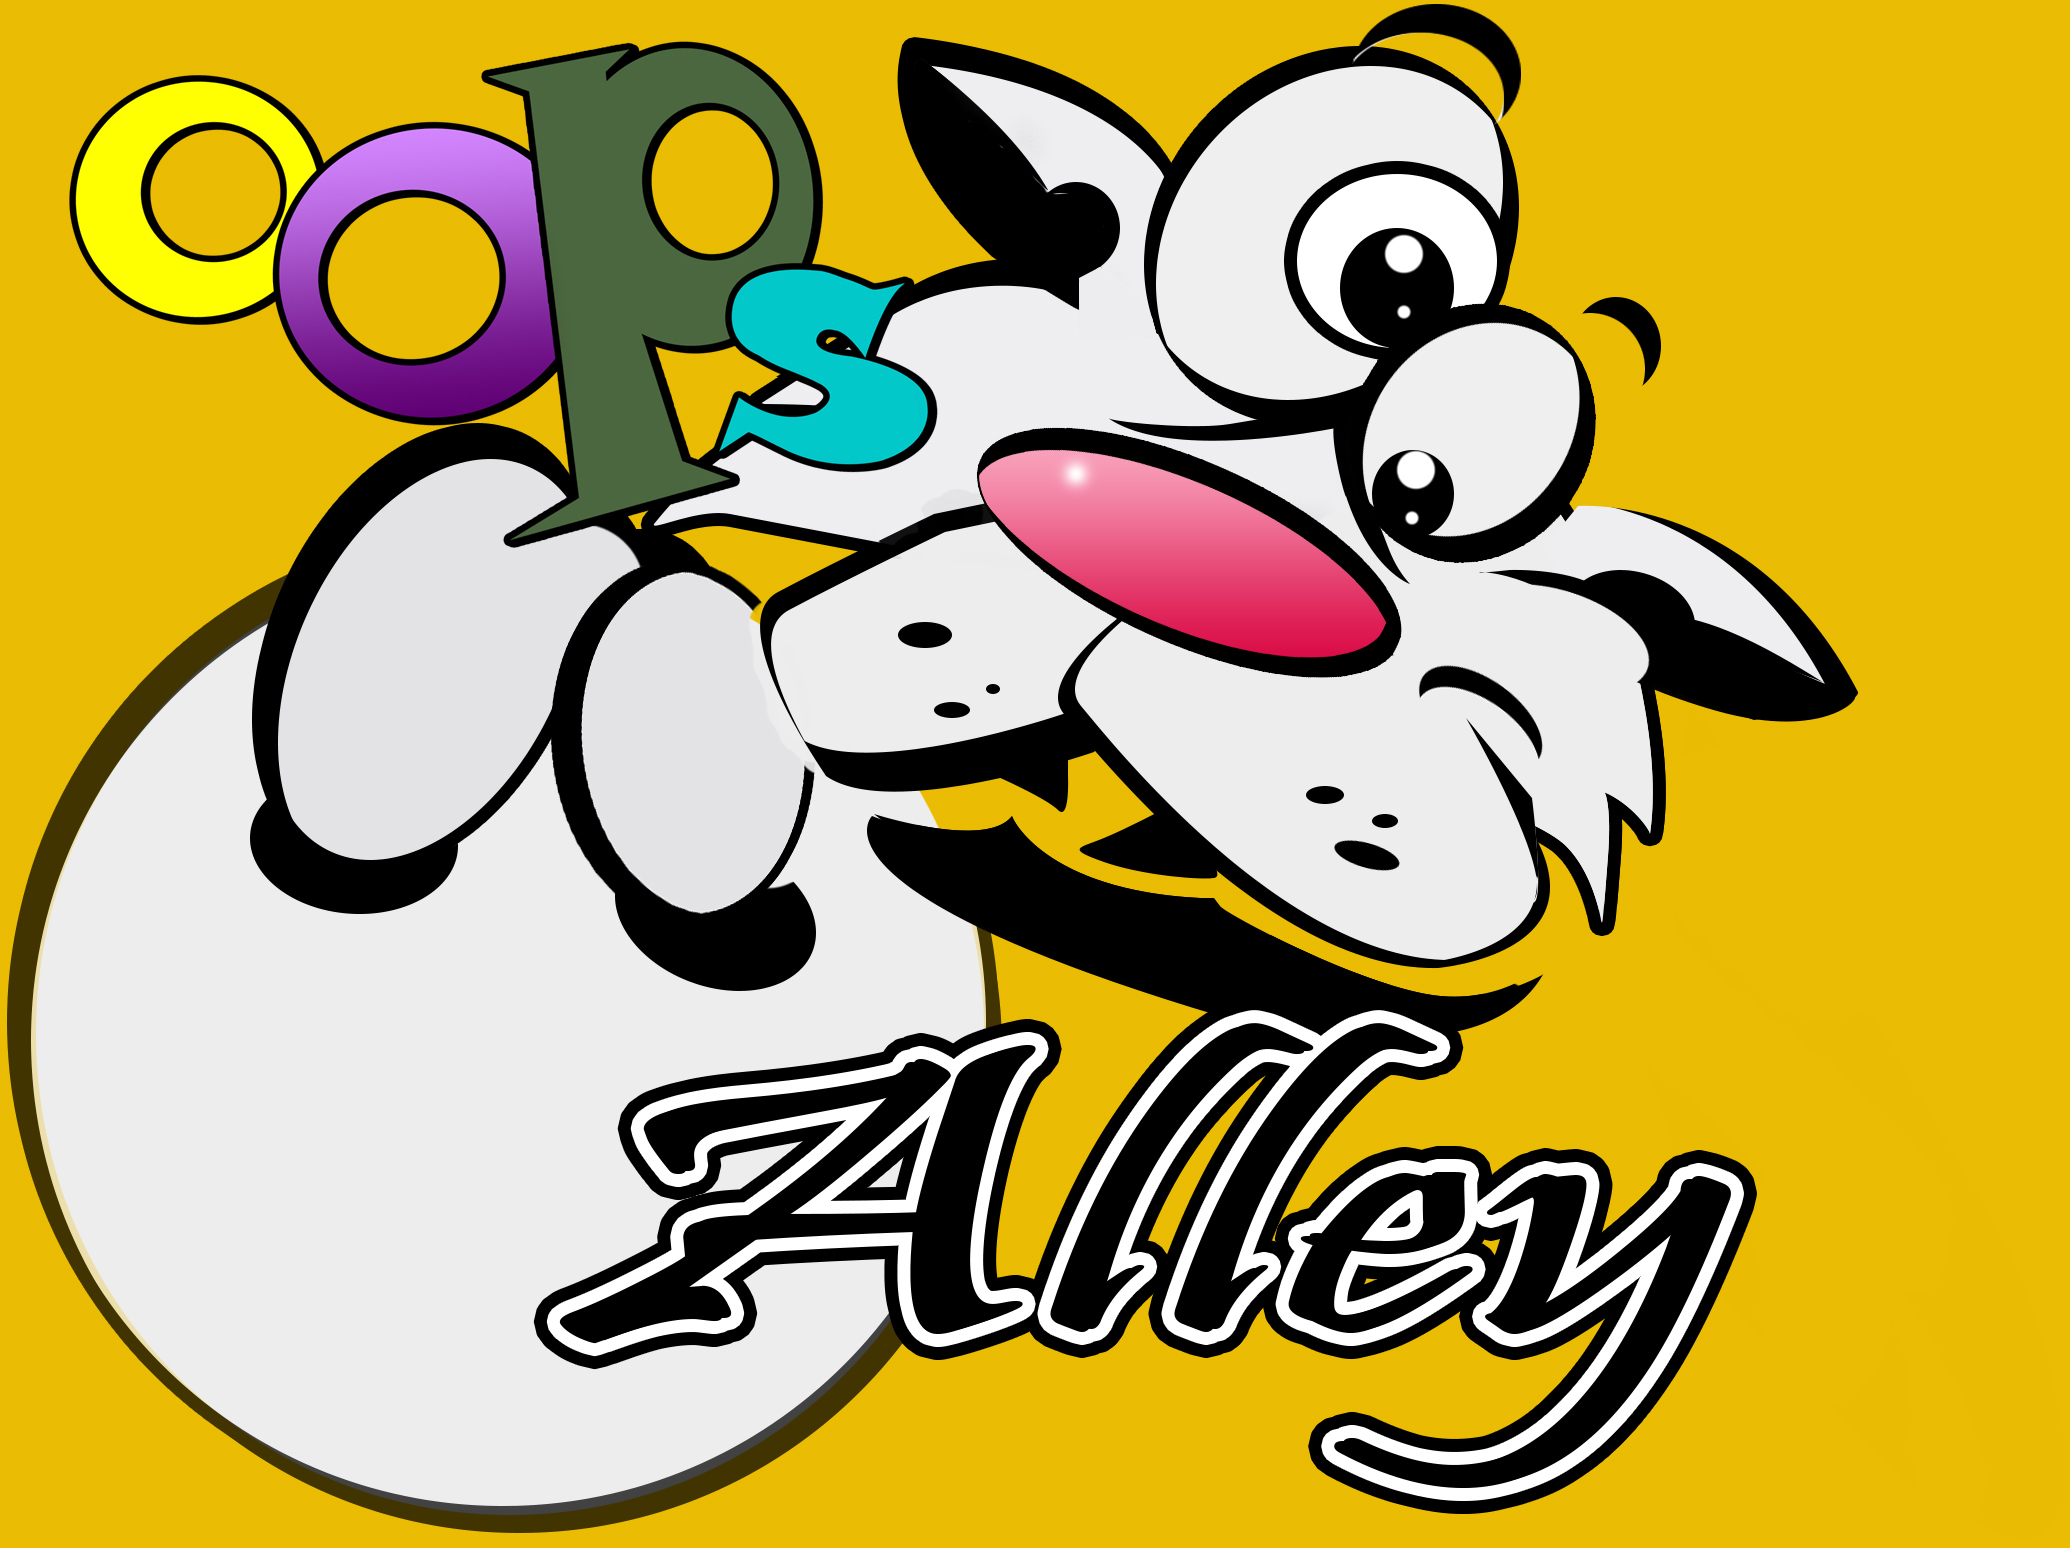 Oops Alley logo